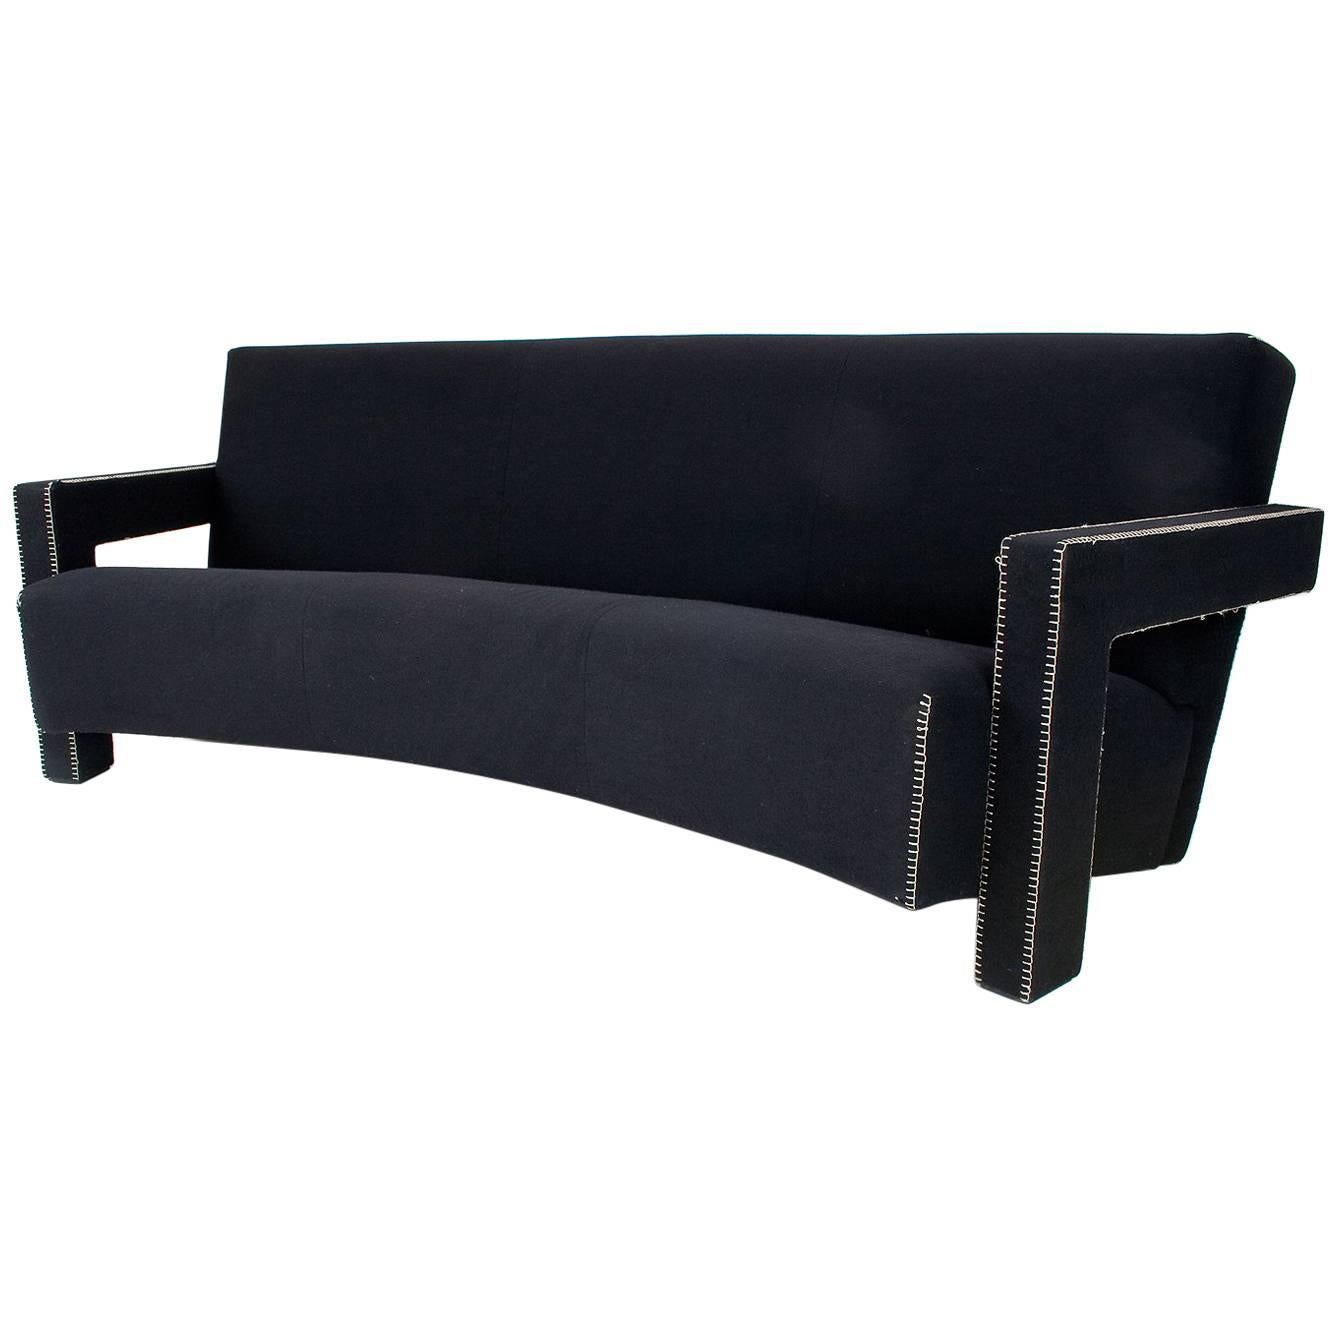 Festinated 'Utrecht' Sofa by Dutch Architect Gerrit Rietveld for Cassina